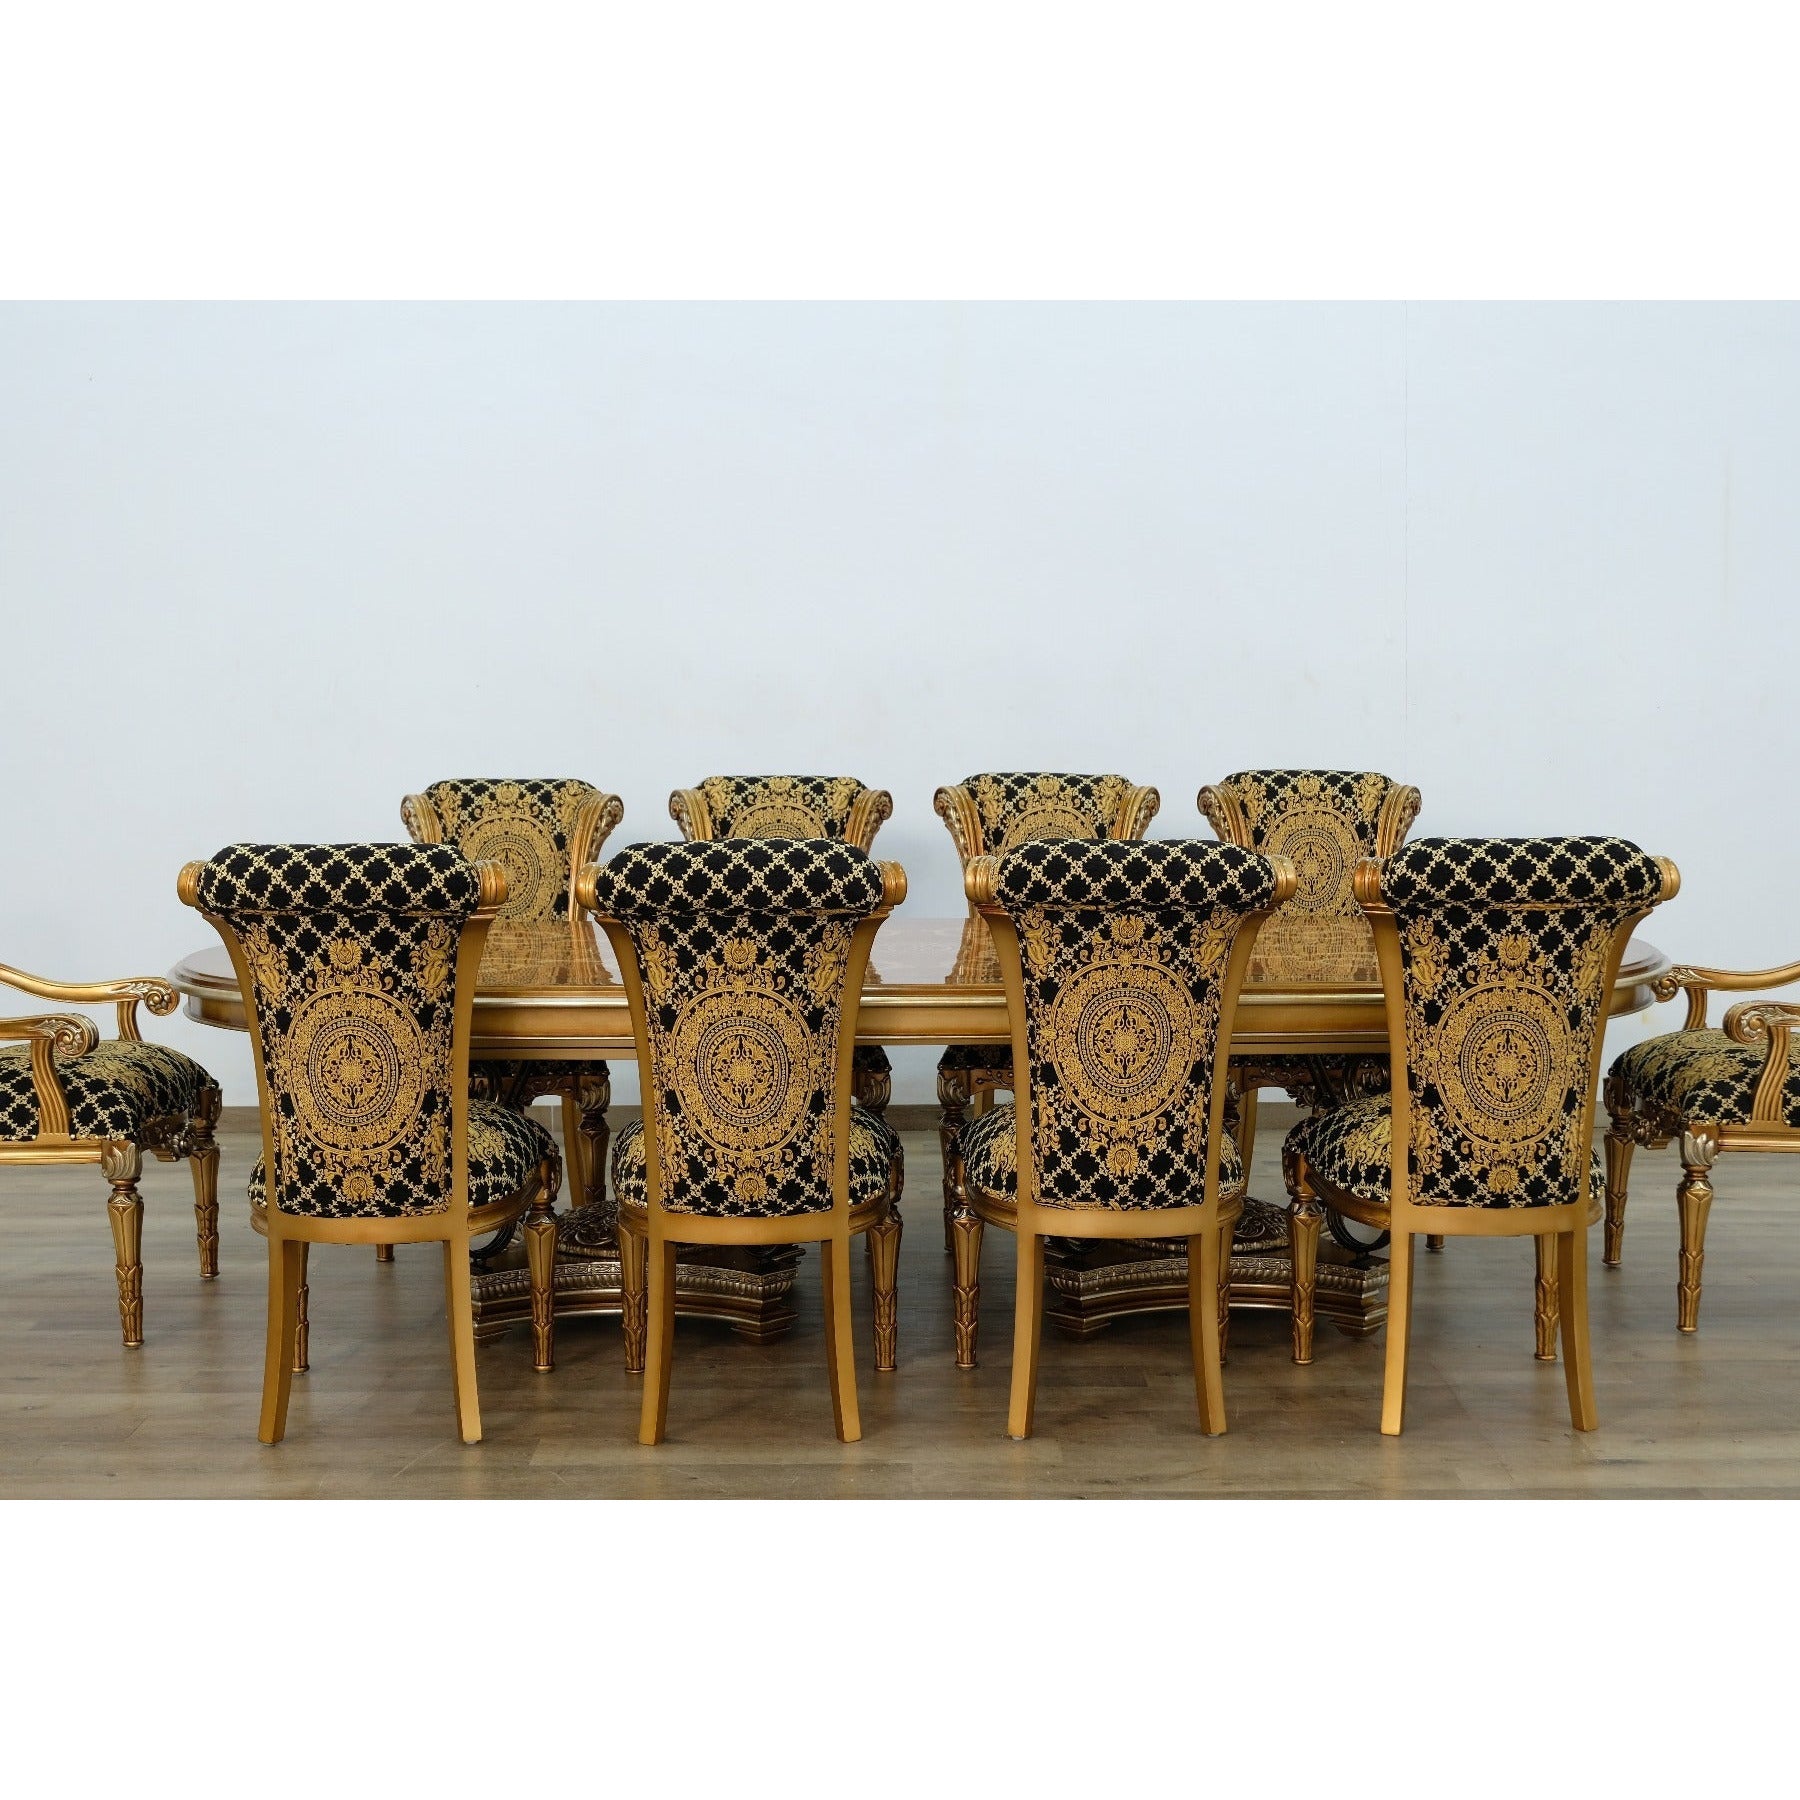 European Furniture - Valentina 11 Piece Dining Room Set in Black and Gold Leaf - 61958-11SET - New Star Living